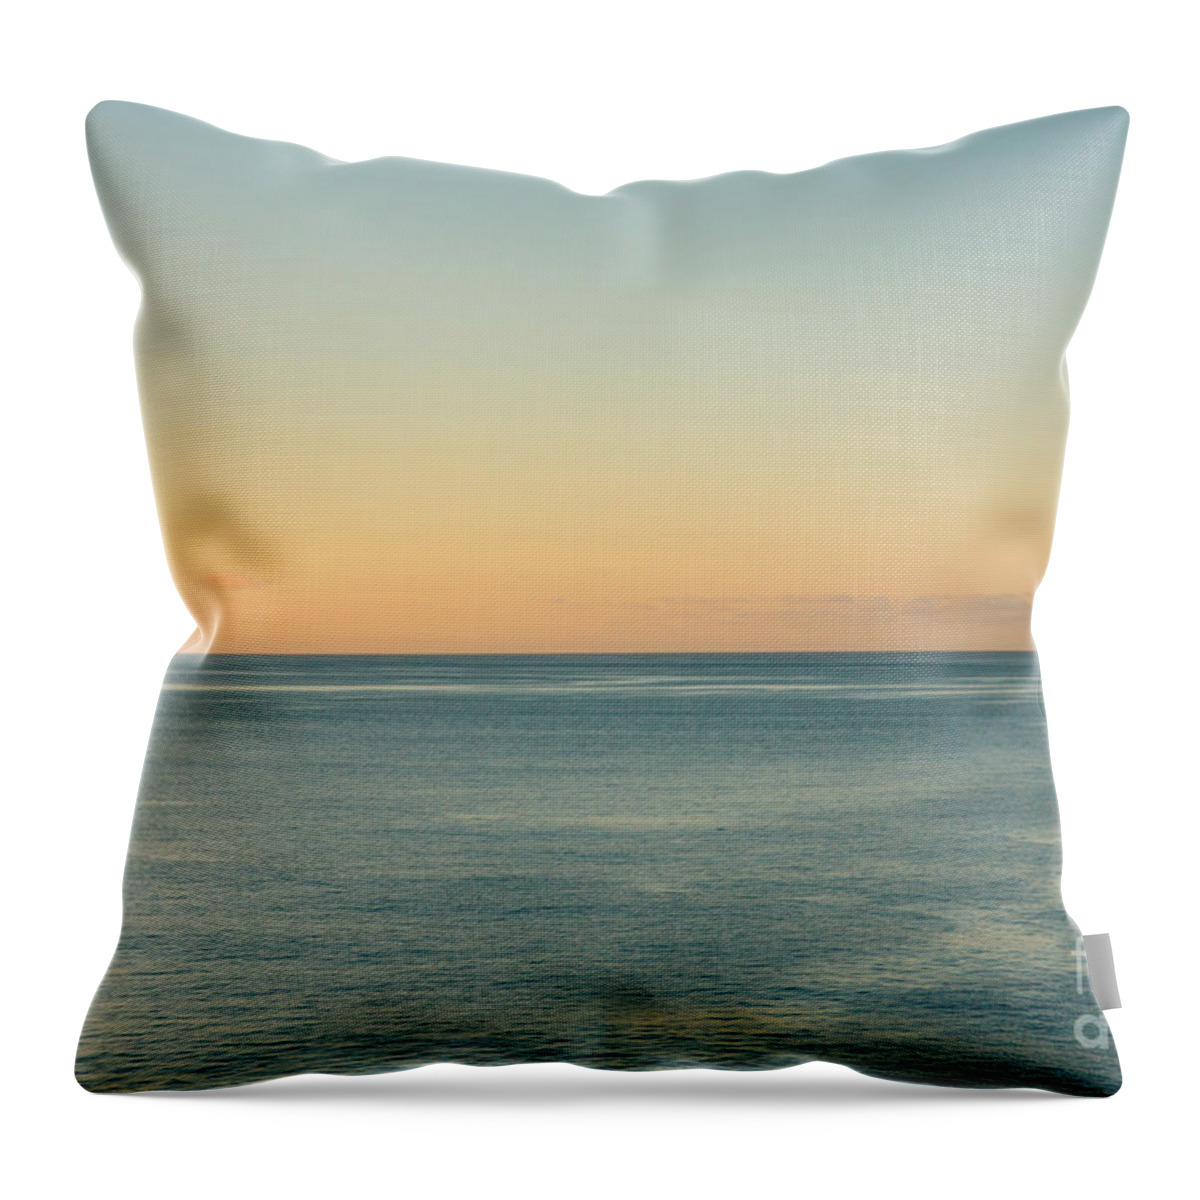 Calmness Throw Pillow featuring the photograph Sunrise and serene ocean by Gaspar Avila